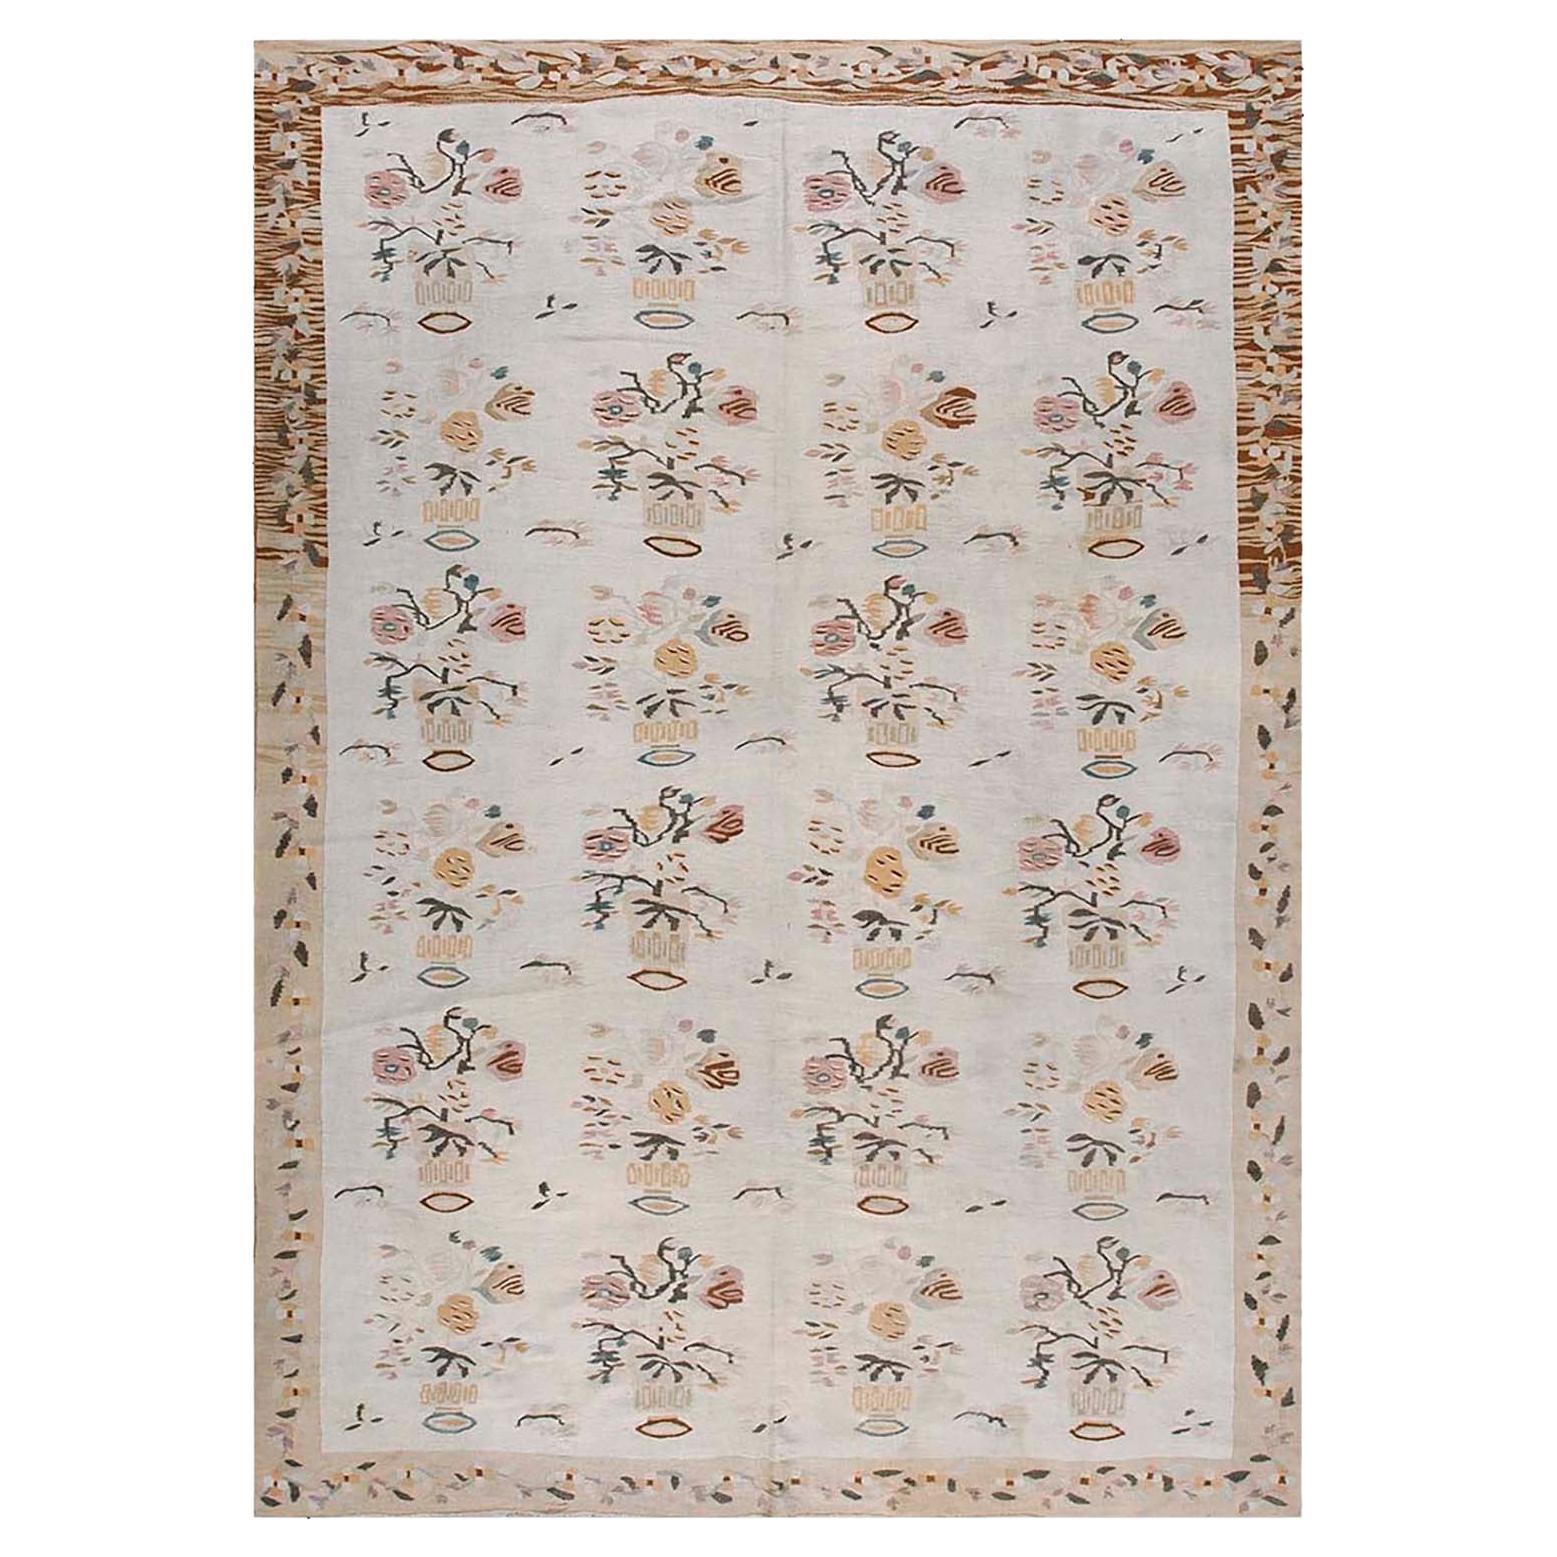 Late 19th Century Besserabian Flat-Weave Carpet ( 7'6" x 11' - 230 x 335 )